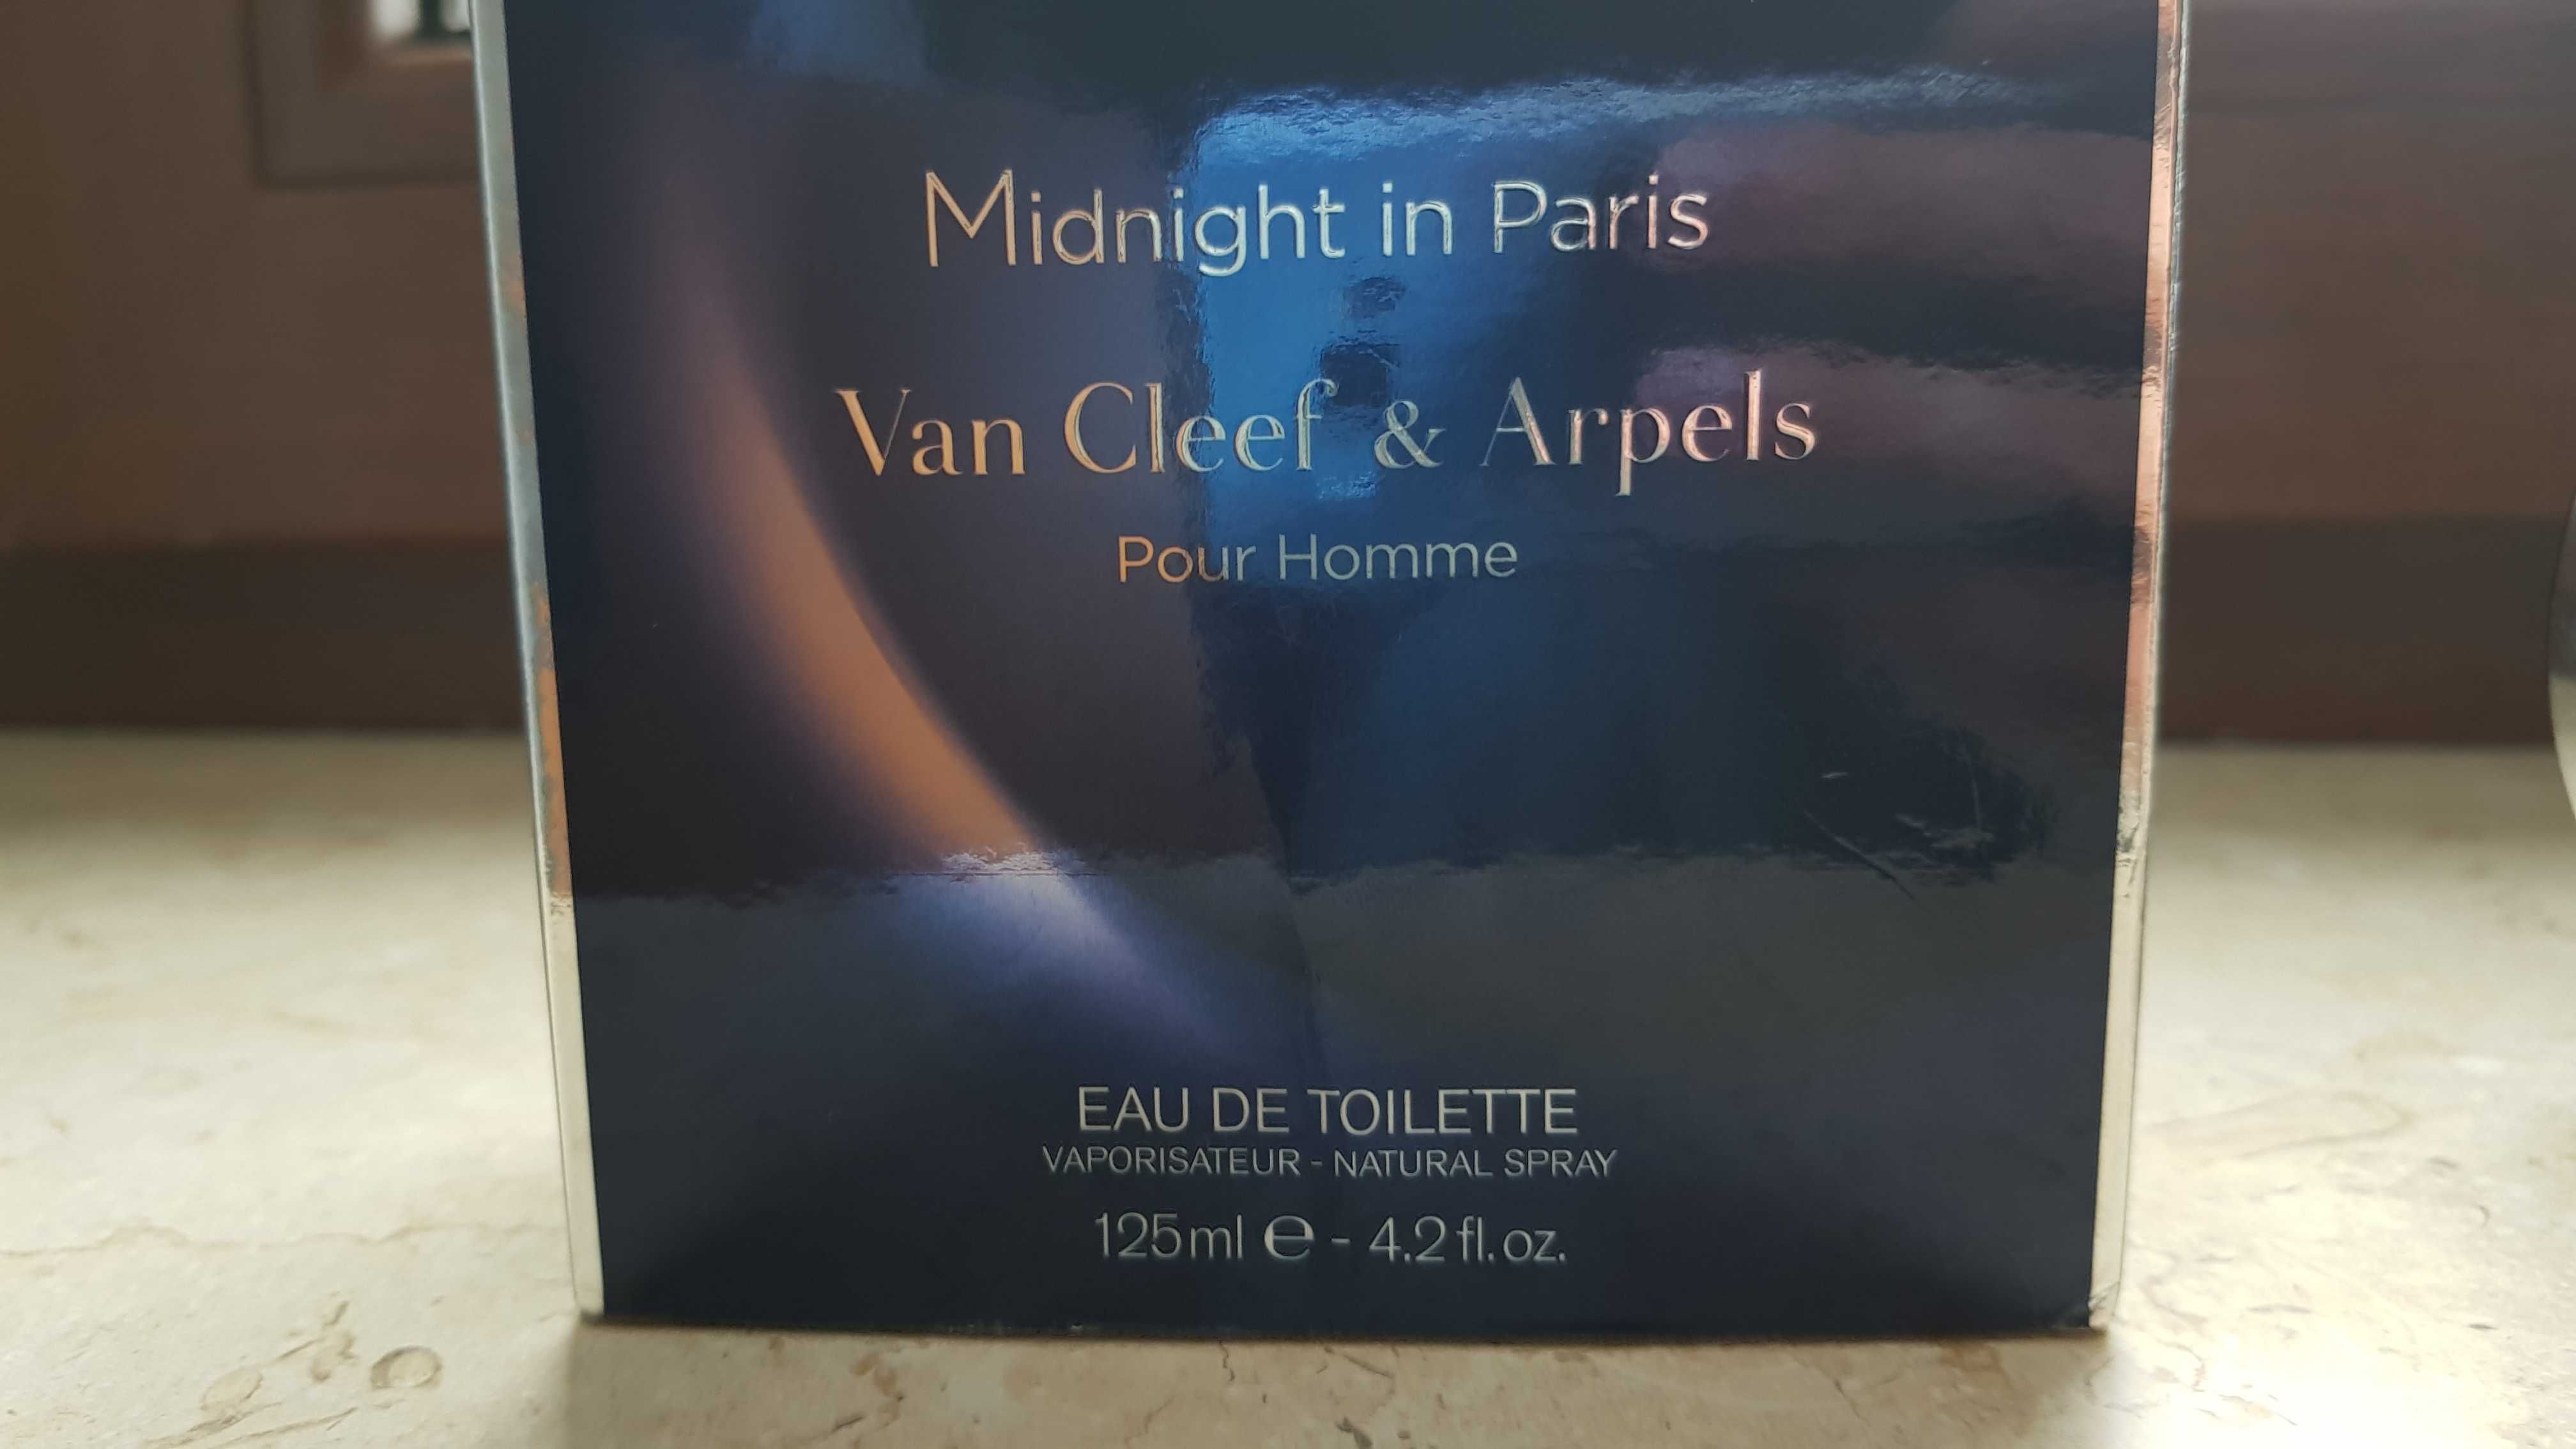 Van Cleef and Arpels Midnight in Paris